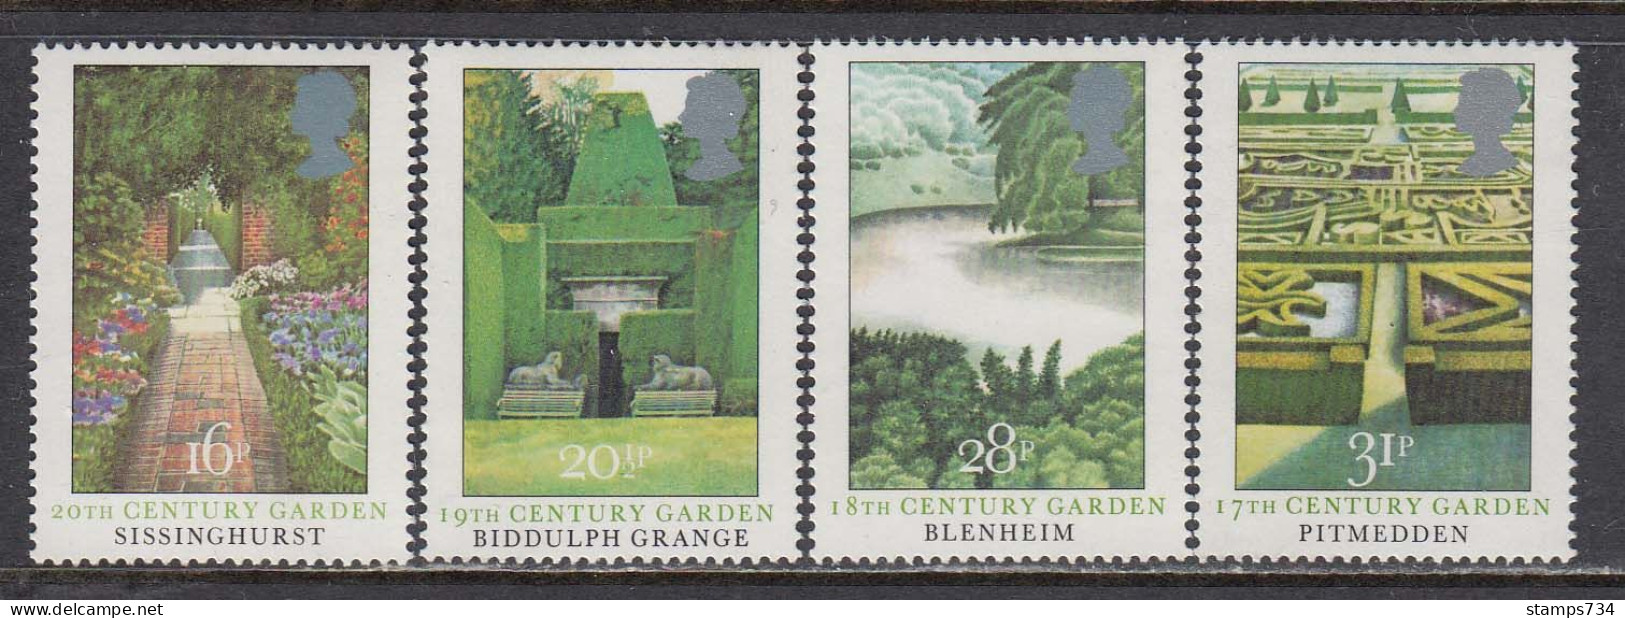 Great Britain 1983 - British Gardens, Set Of 4 Stamps, MNH** - Nuovi